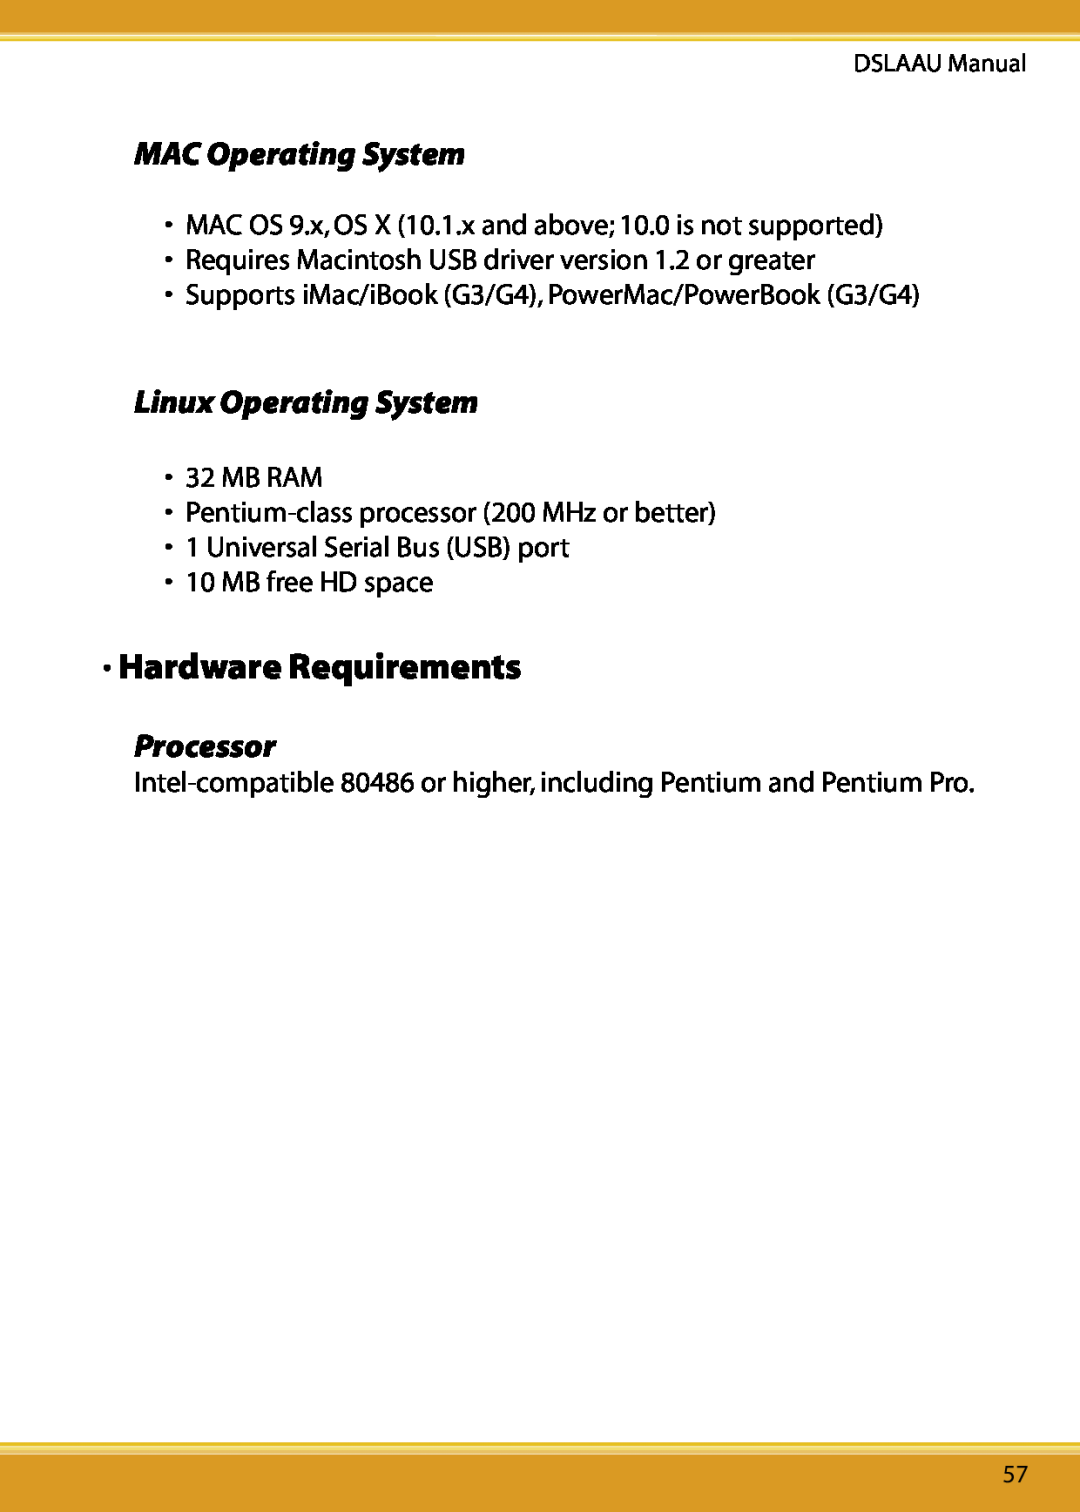 Corega DSLAAU user manual Hardware Requirements, MAC Operating System, Linux Operating System, Processor 